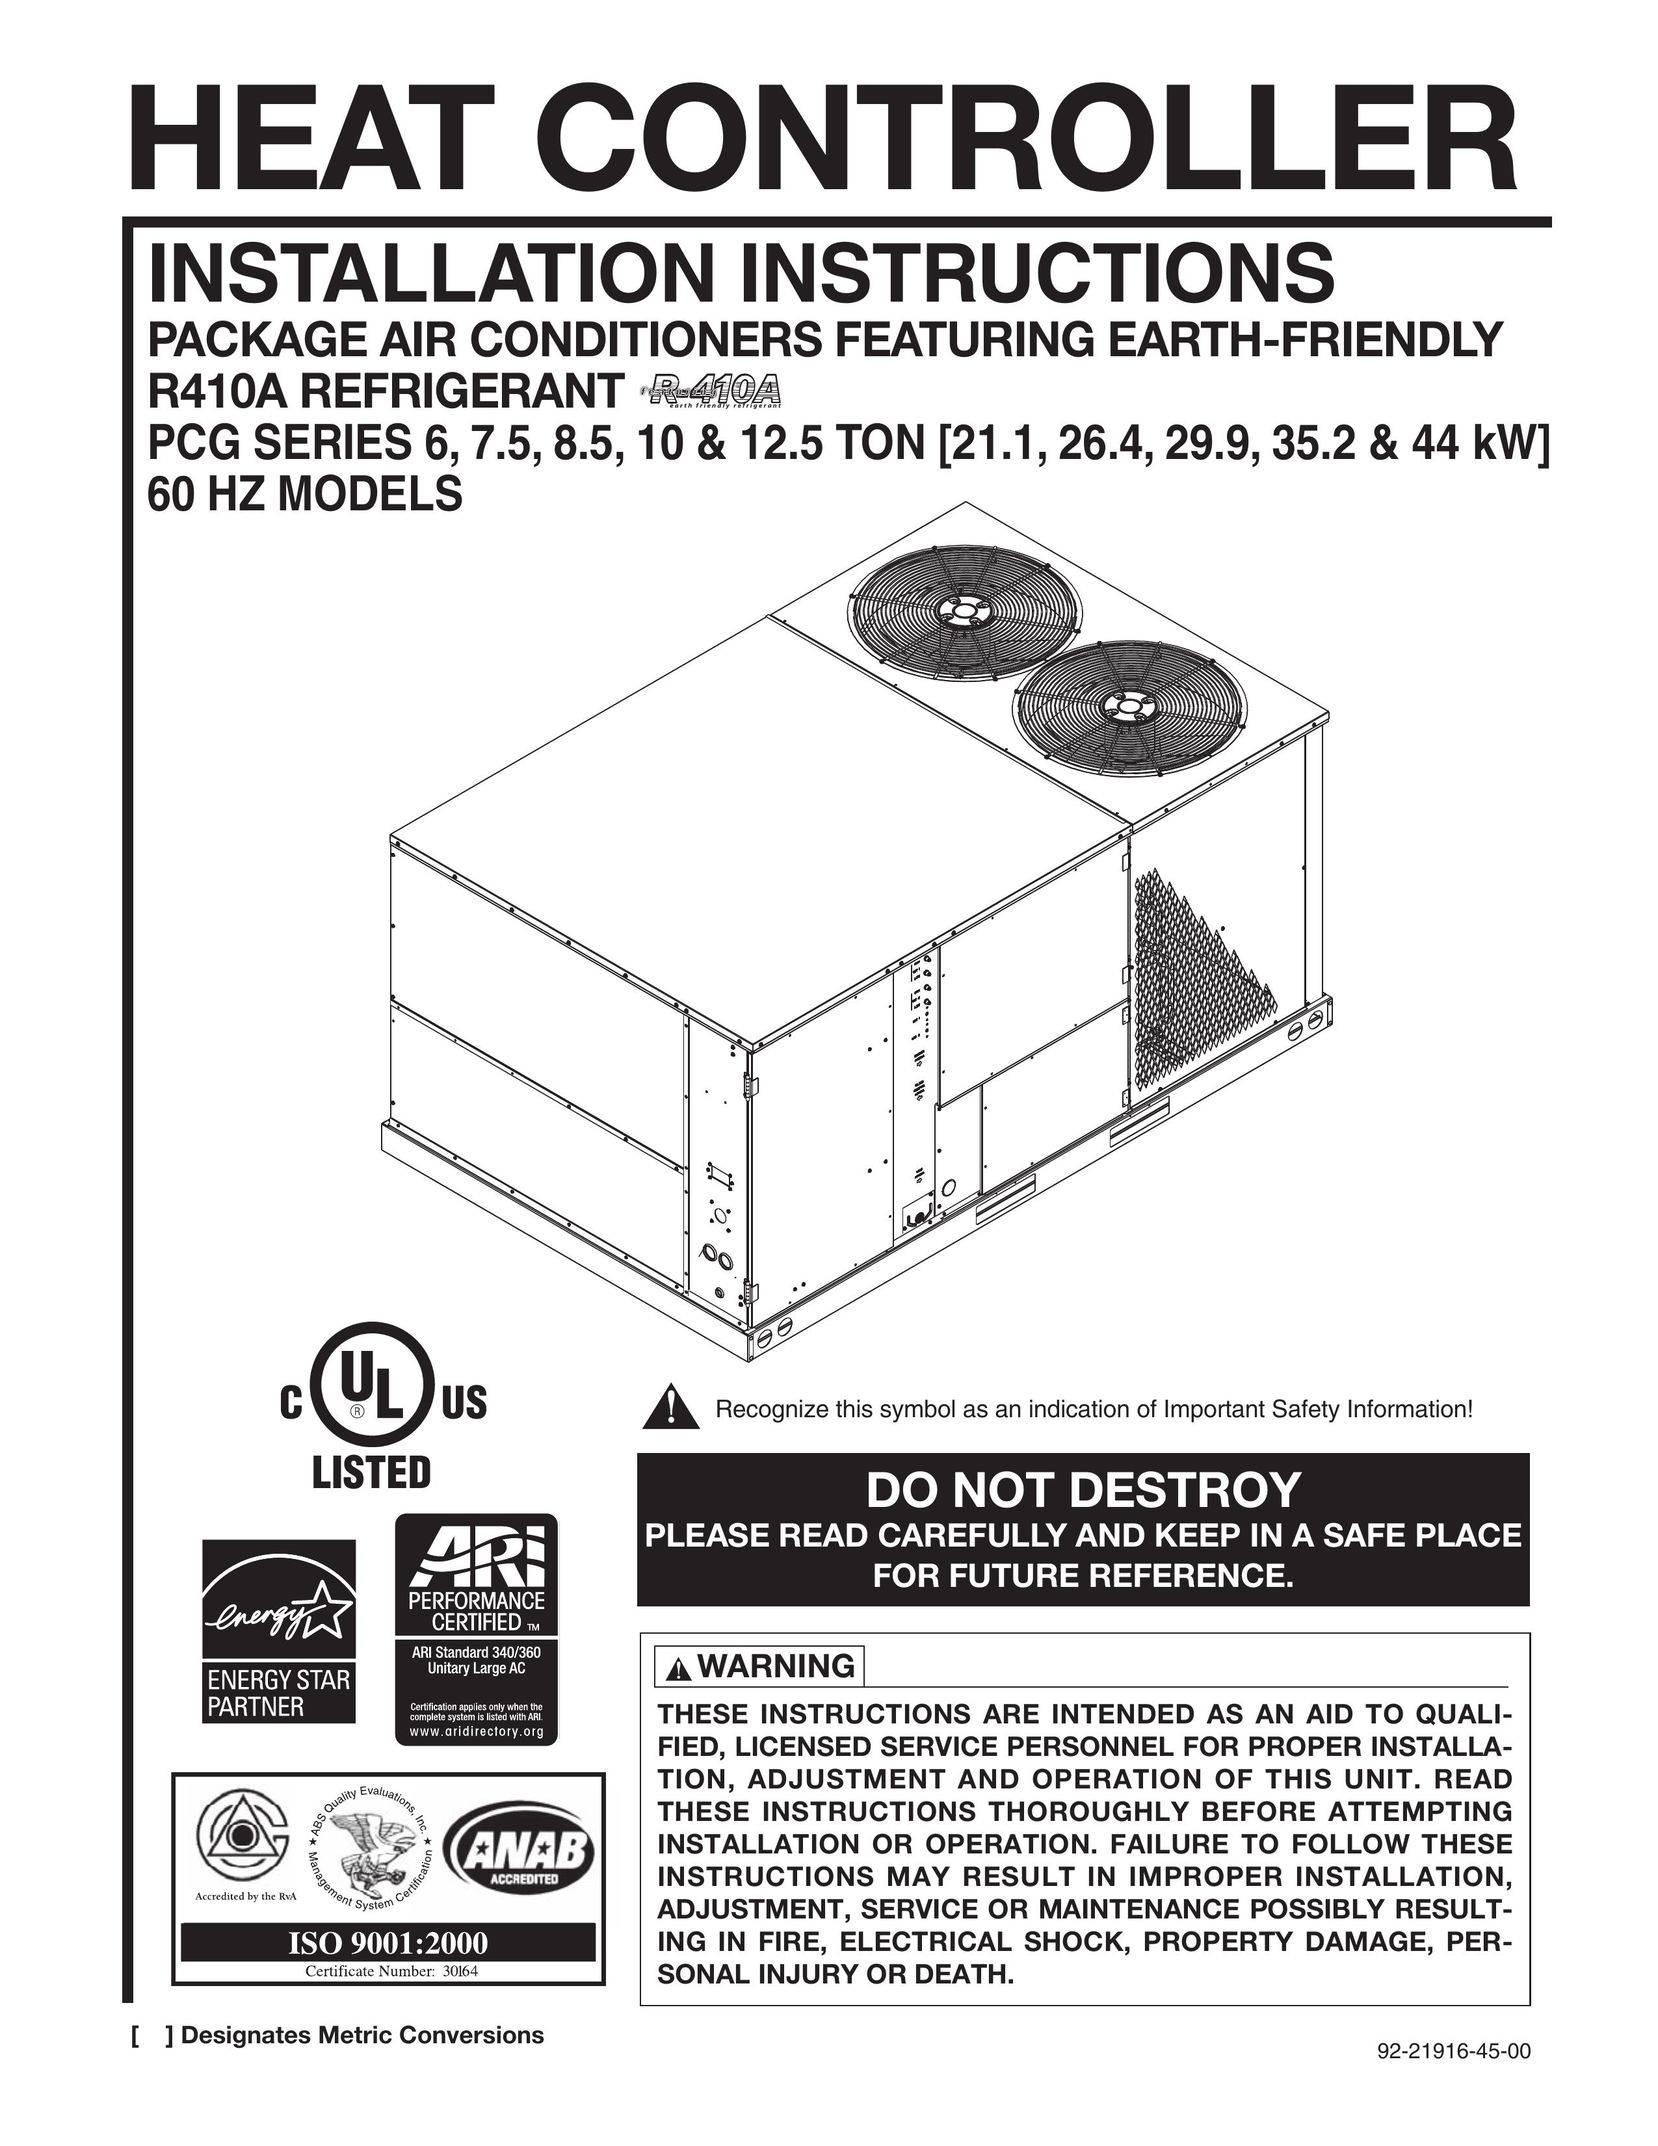 Heat Controller 12.5 TON Air Conditioner User Manual